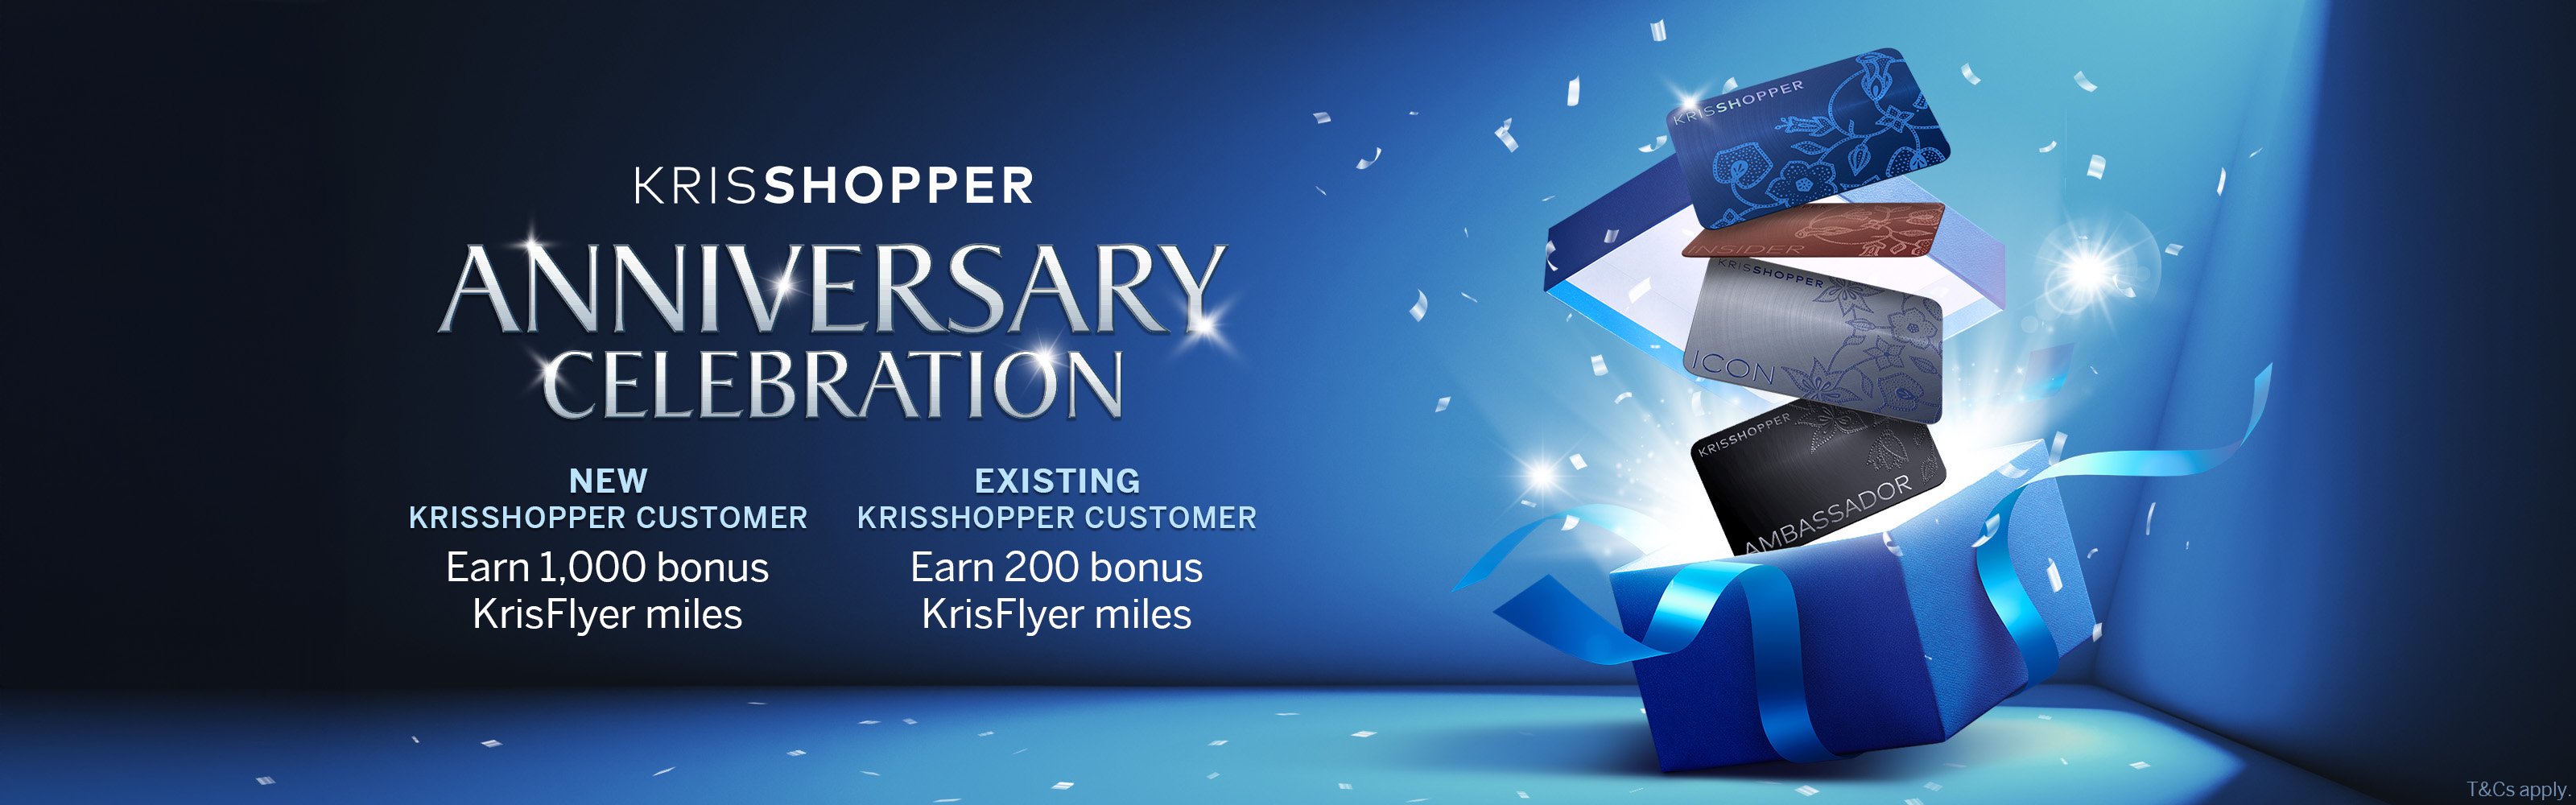 KrisShopper 2nd Anniversary